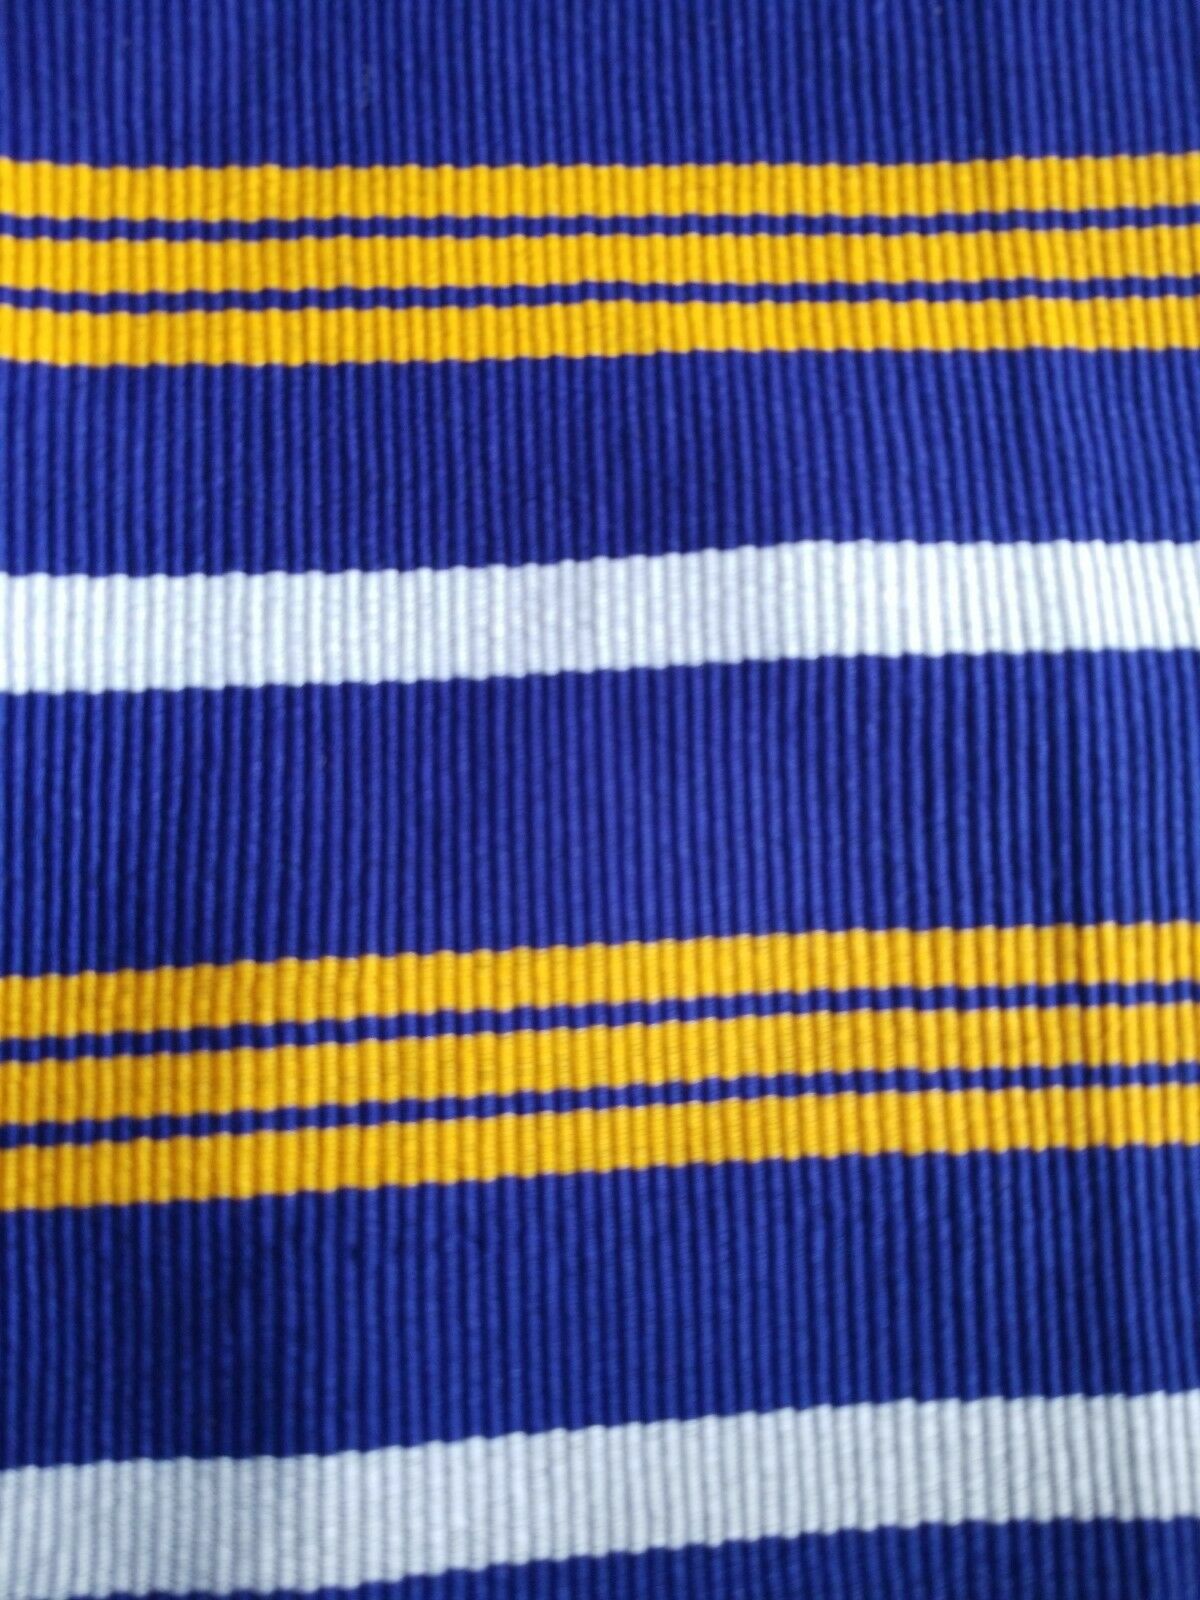 Faso Da Fani Fabric From Boukina Faso~Blue Yellow &white 2yds(72")×48"